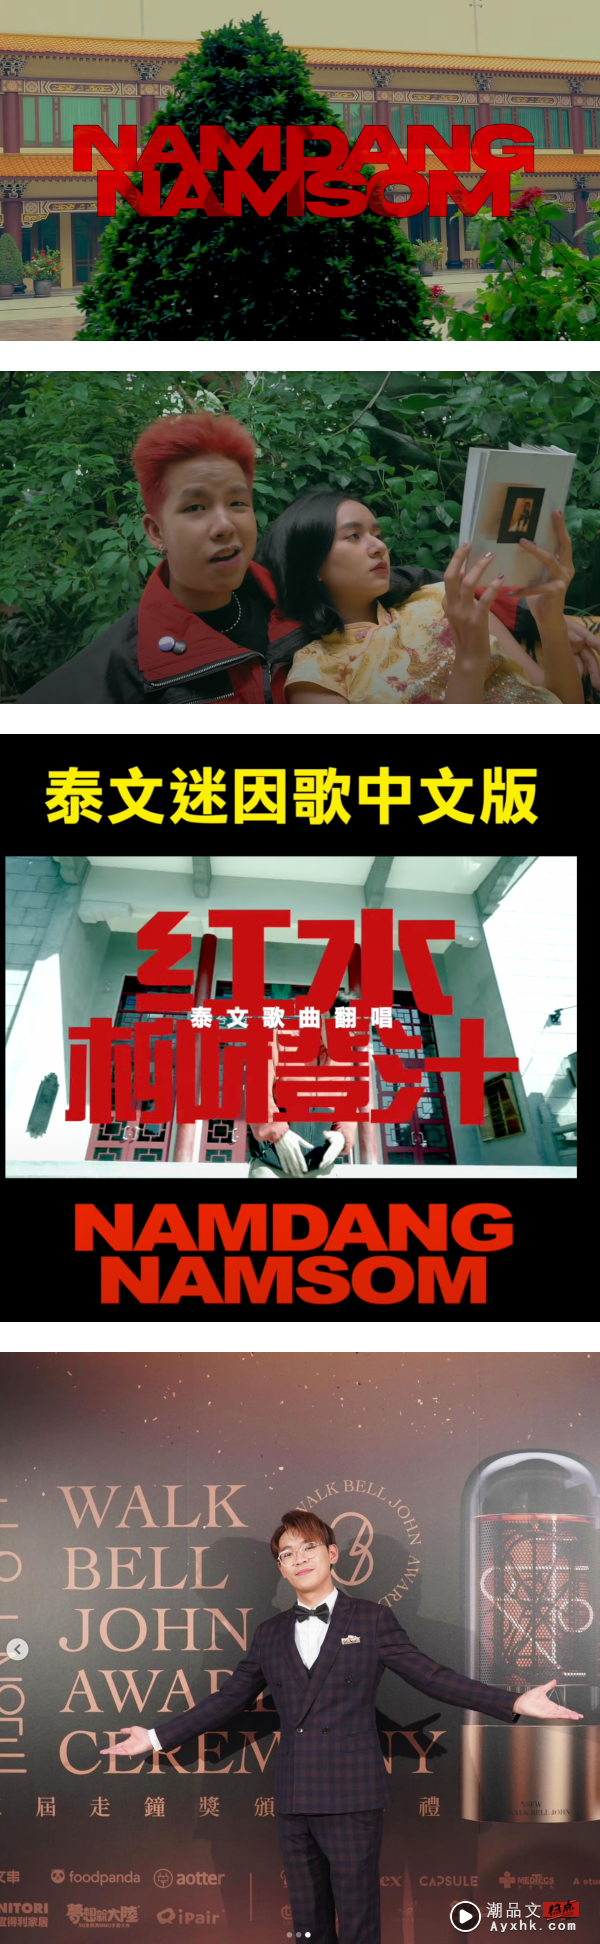 《NAM DANG NAM SOM》中文版来了！“超强系列”神模仿原唱土味唱腔…歌词超有才！ 娱乐资讯 图1张